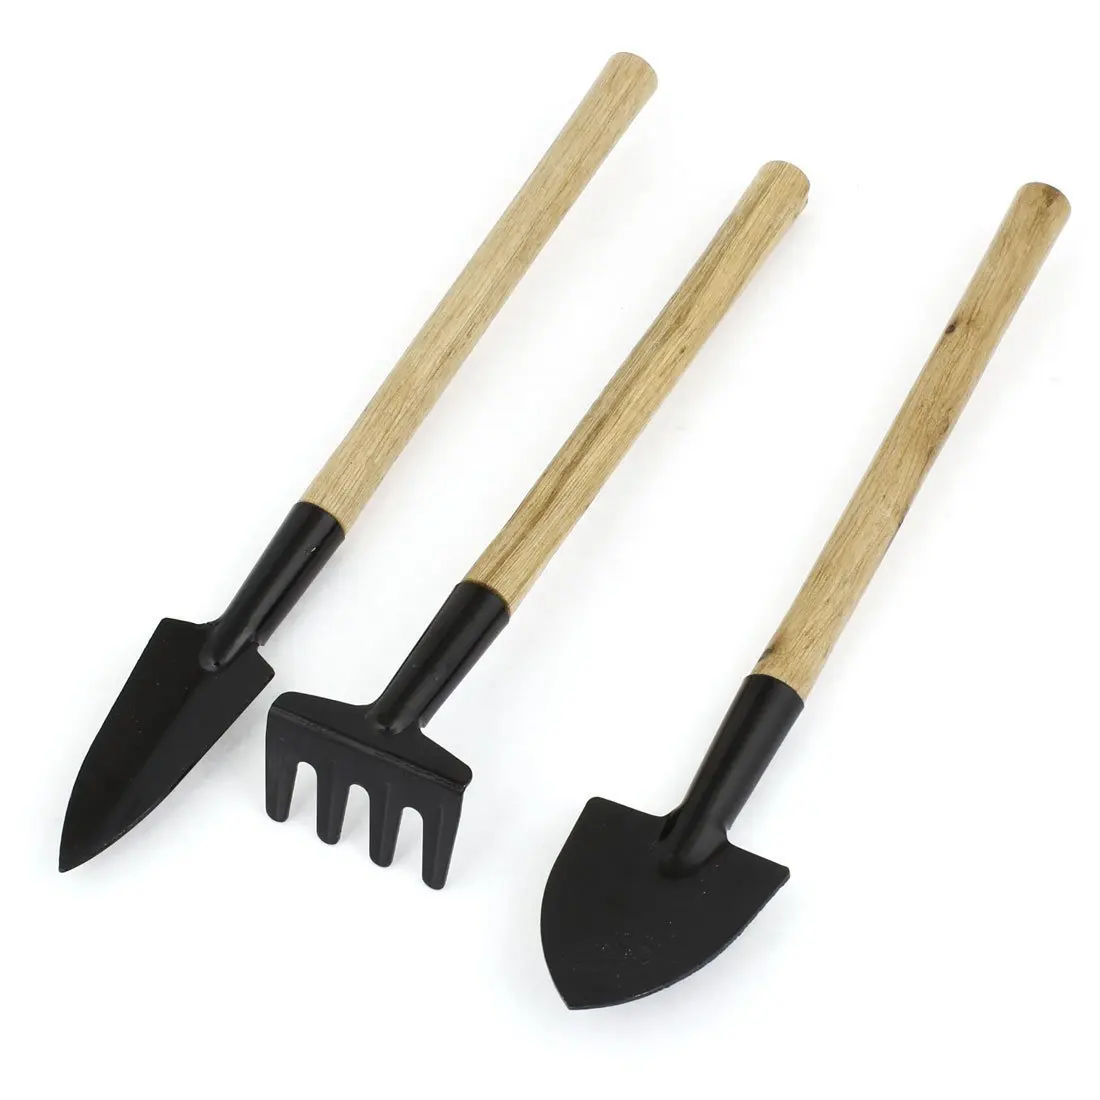 Cheap Wood Handle Grain Shovel, find Wood Handle Grain Shovel deals on ...